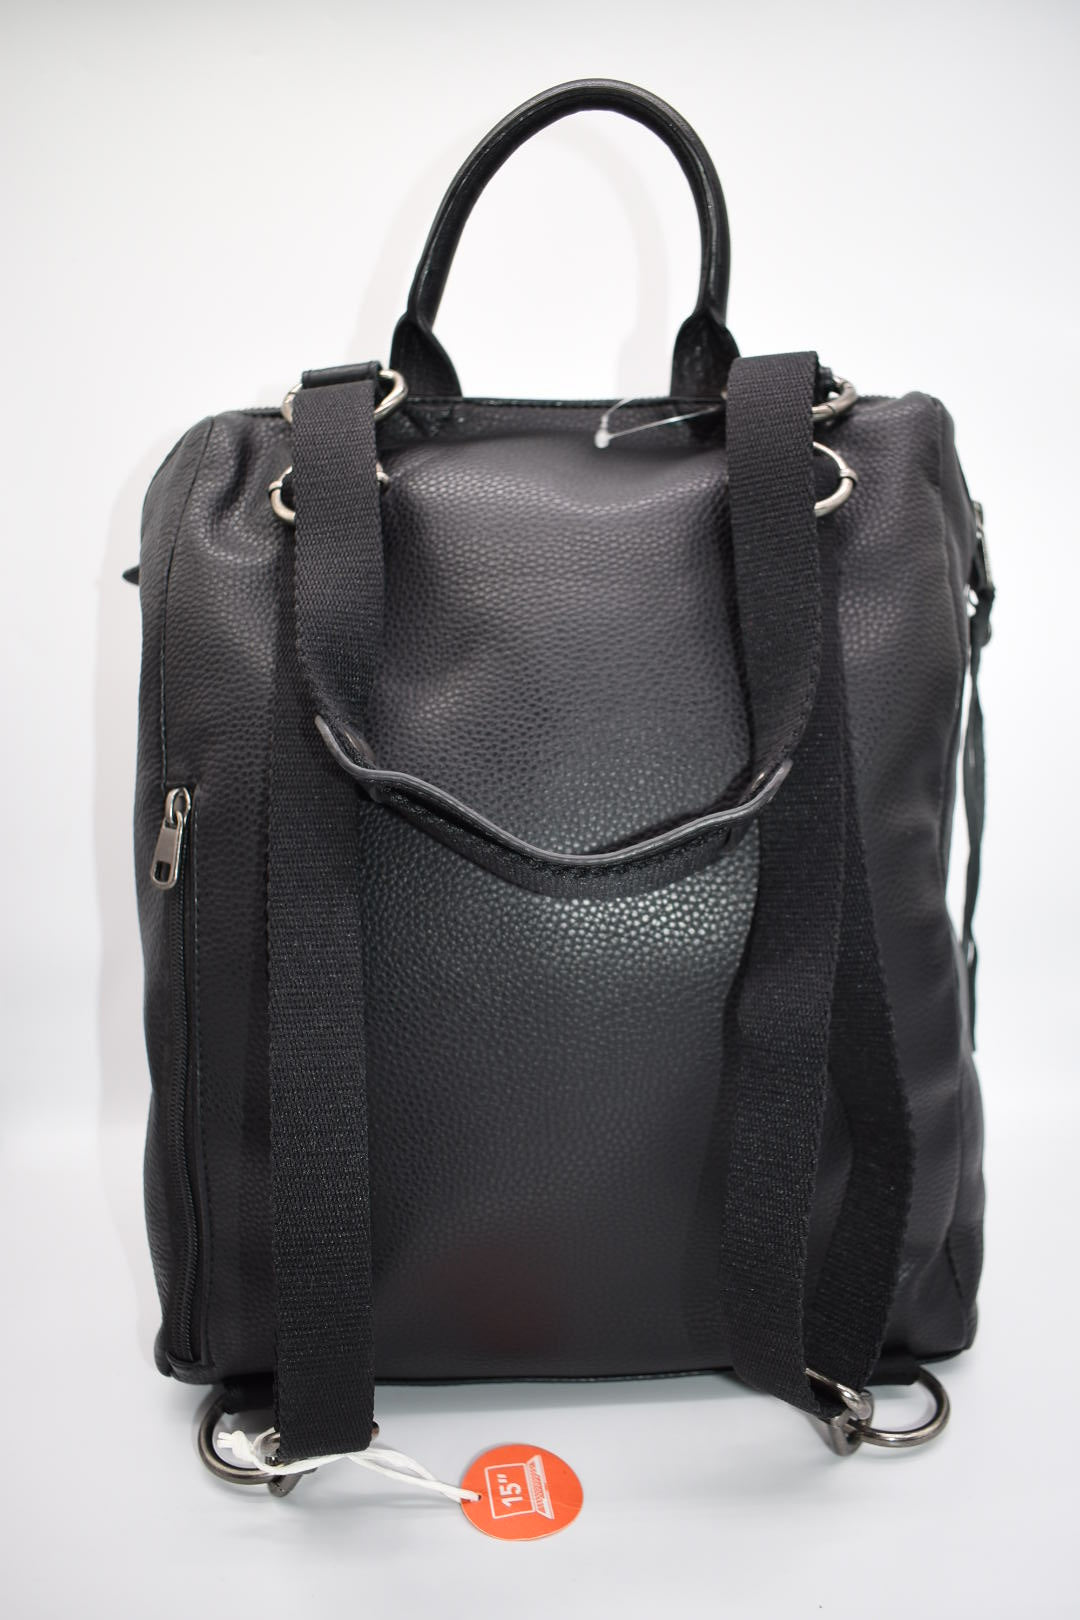 The Sak Loyola Leather Backpack in Black